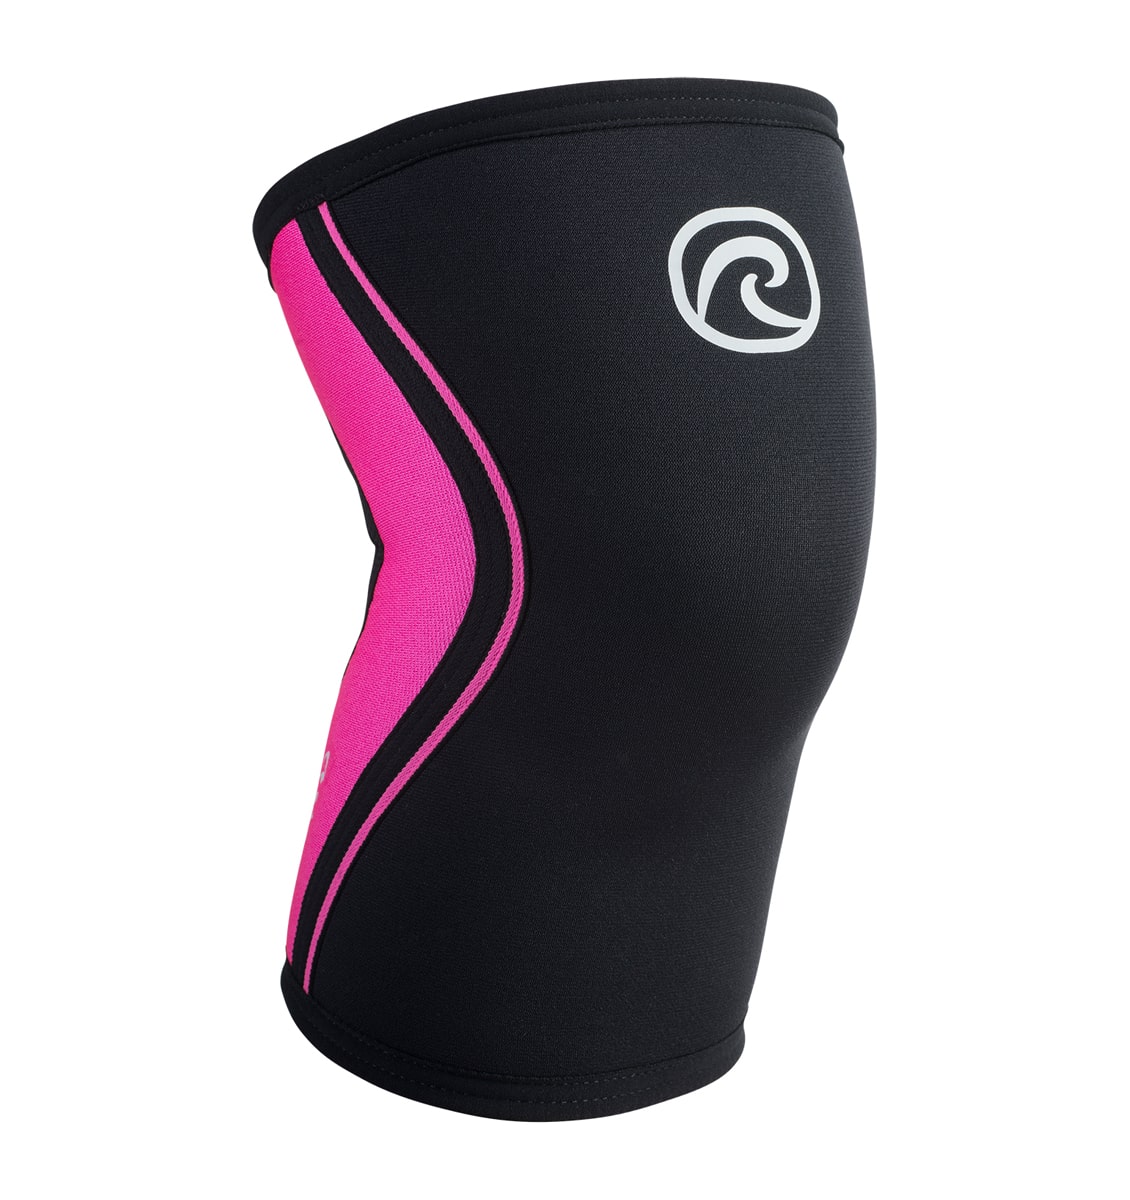 105333 - Rehband Rx Knee Sleeve - Black/Pink - 5mm - Front